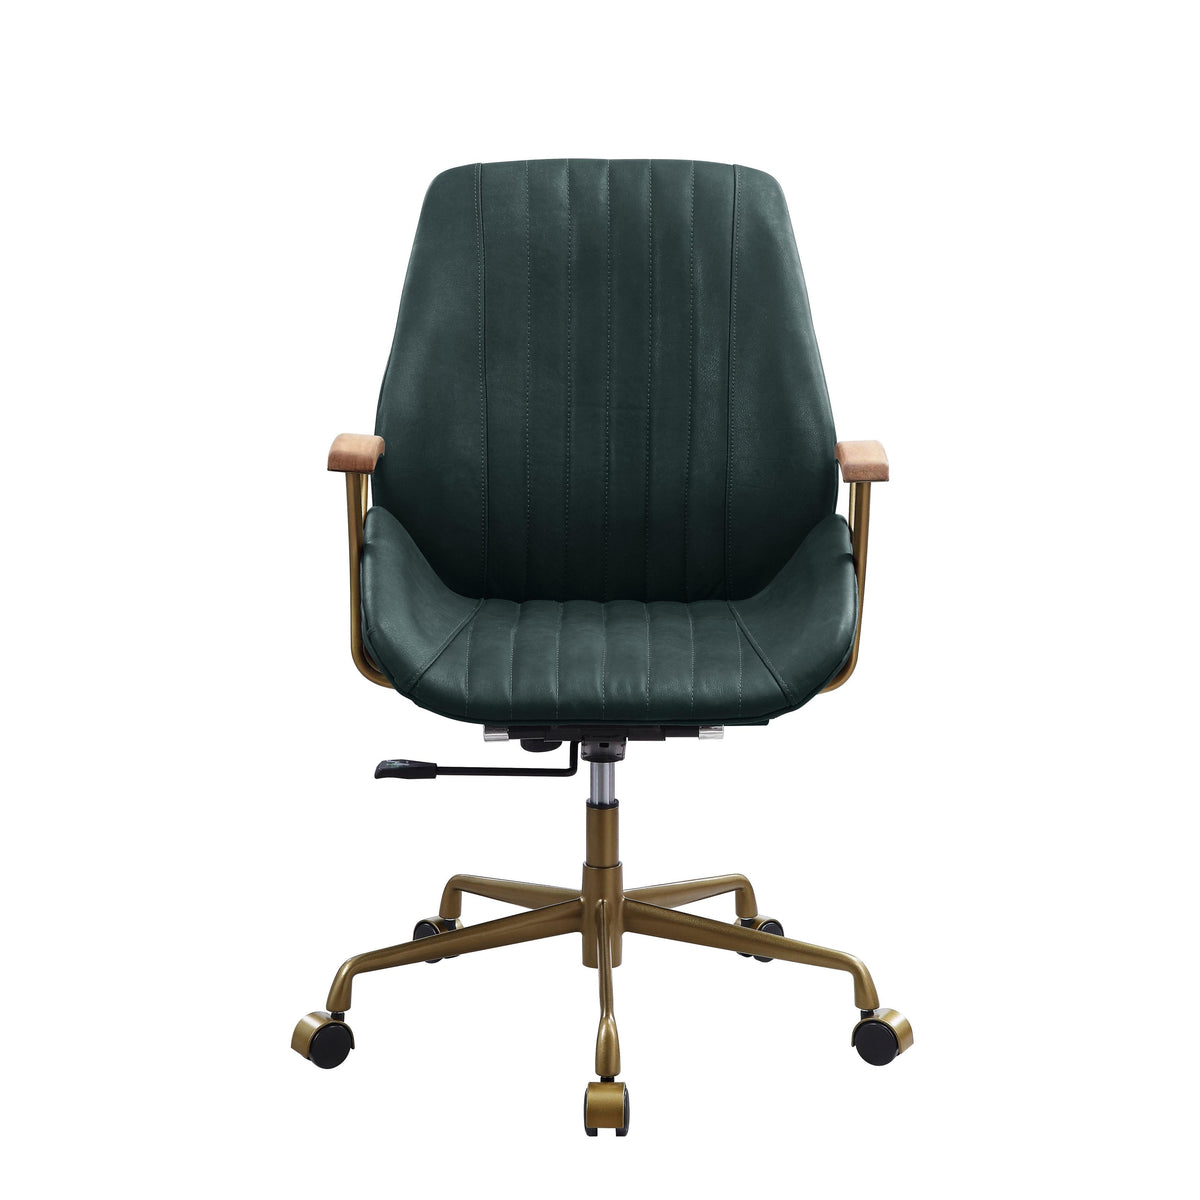 Acme Furniture Hamilton 93240 Office Chair - Green